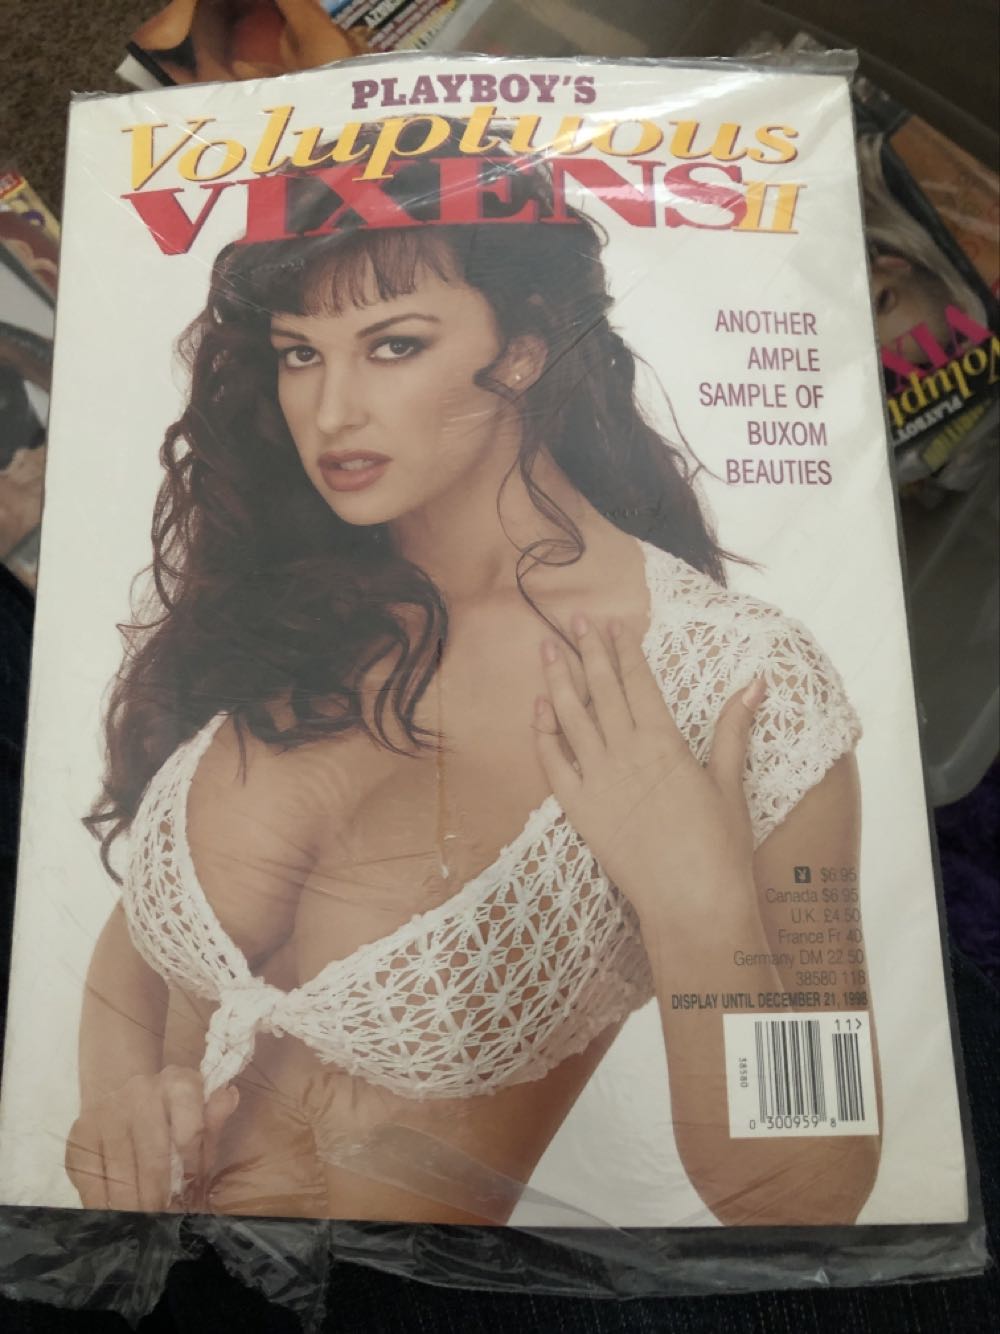 Playboy’s Voluptuous Vixens  magazine collectible [Barcode 03009500009811] - Main Image 1